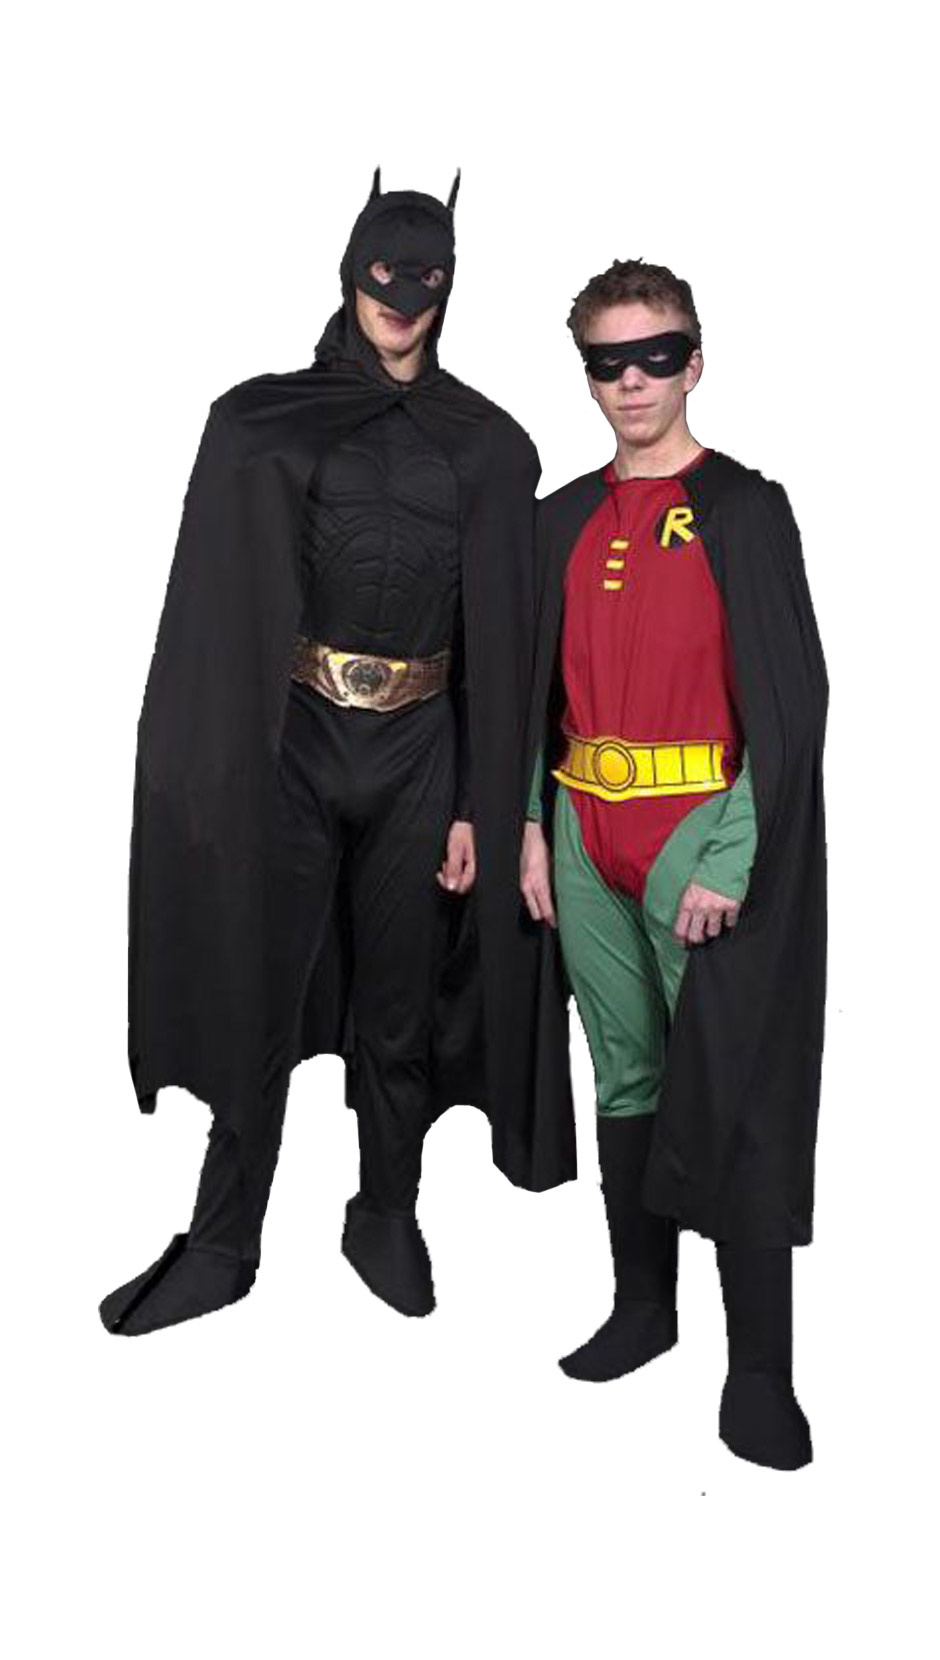 hypothese Specialist pols Batman en Robin outfit - Incognito Leusden